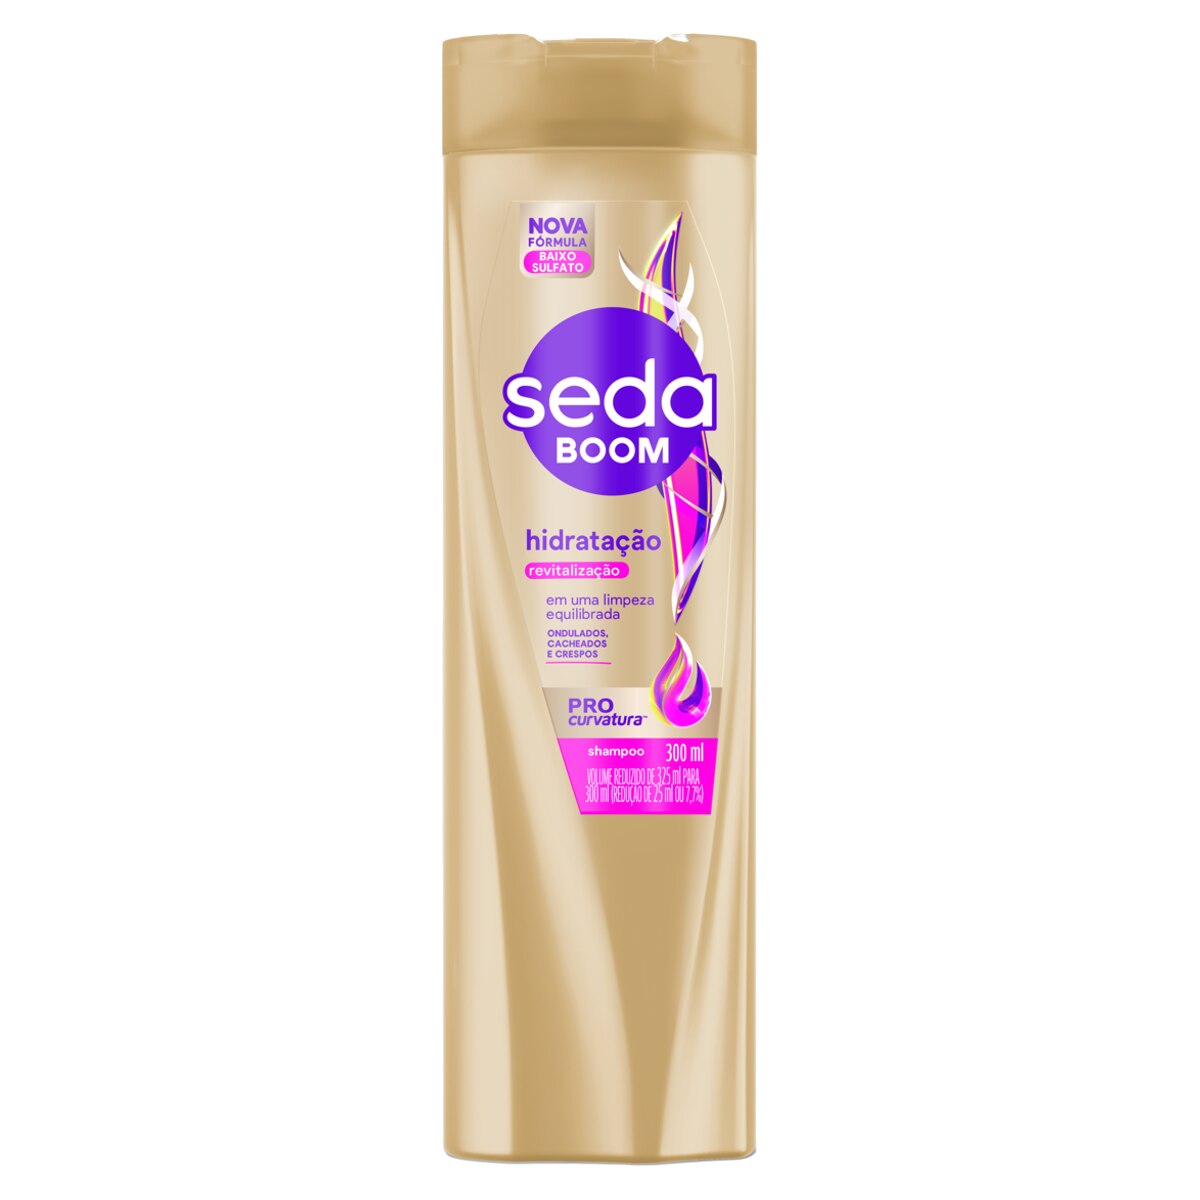 Shampoo Seda Boom Pro Curvatura Hidratacao Revitalizacao 300ml